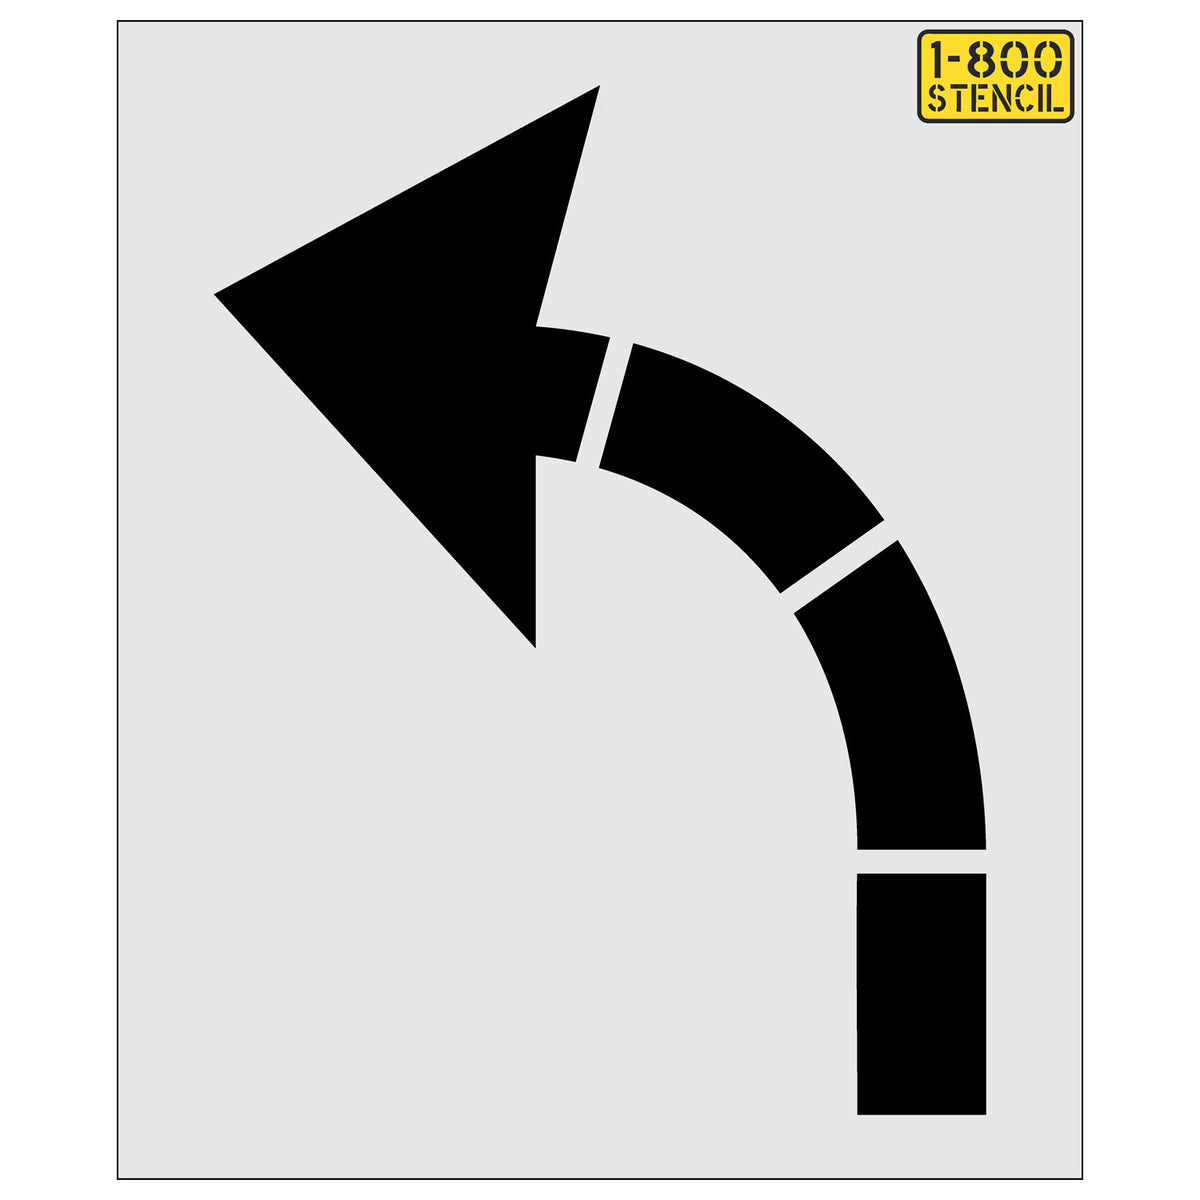 left turn arrow symbol